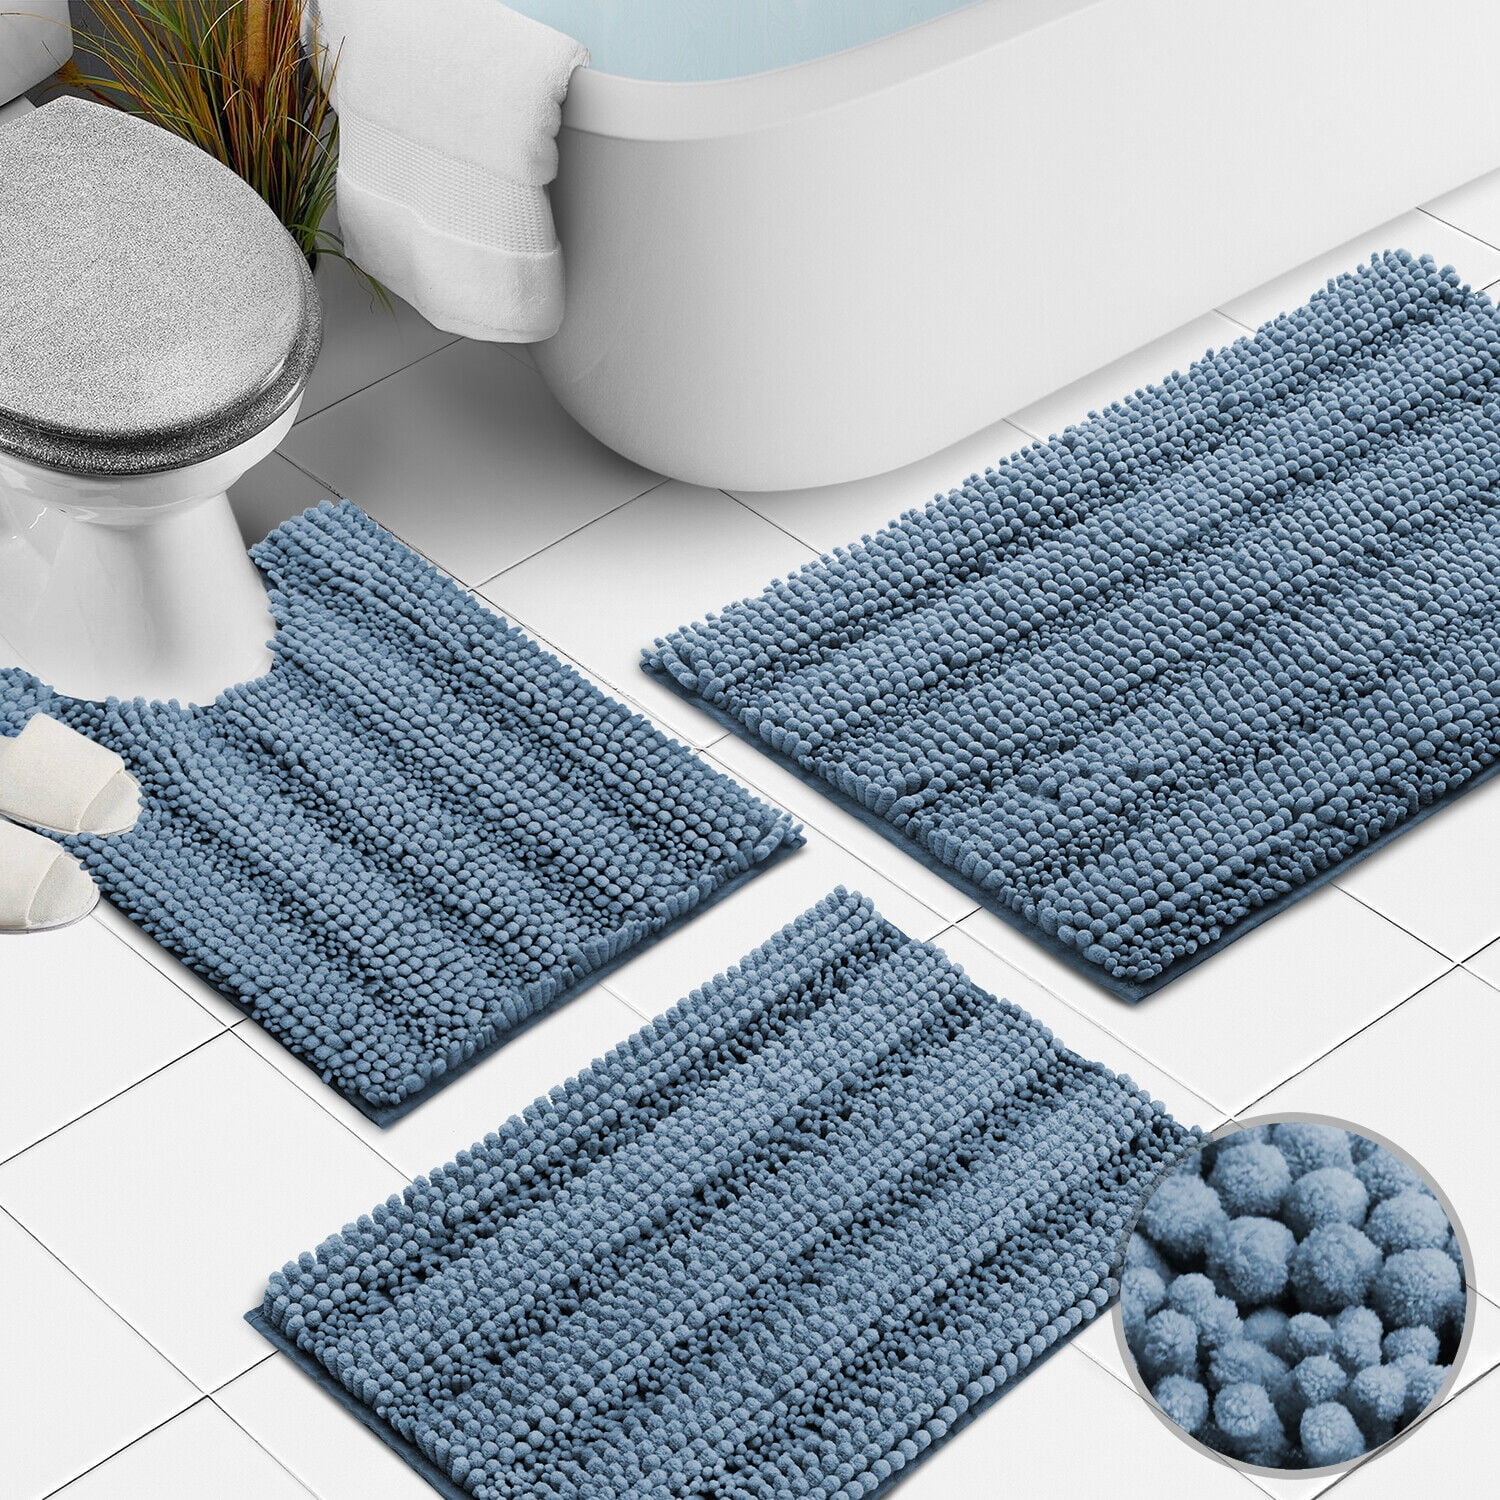 Duck egg blue bathroom rugs, contour rug sets, extra thick bath mats,  anti-slip soft plush chenille shaggy bath mats (50 x 80cm plus 50 x 50cm u)